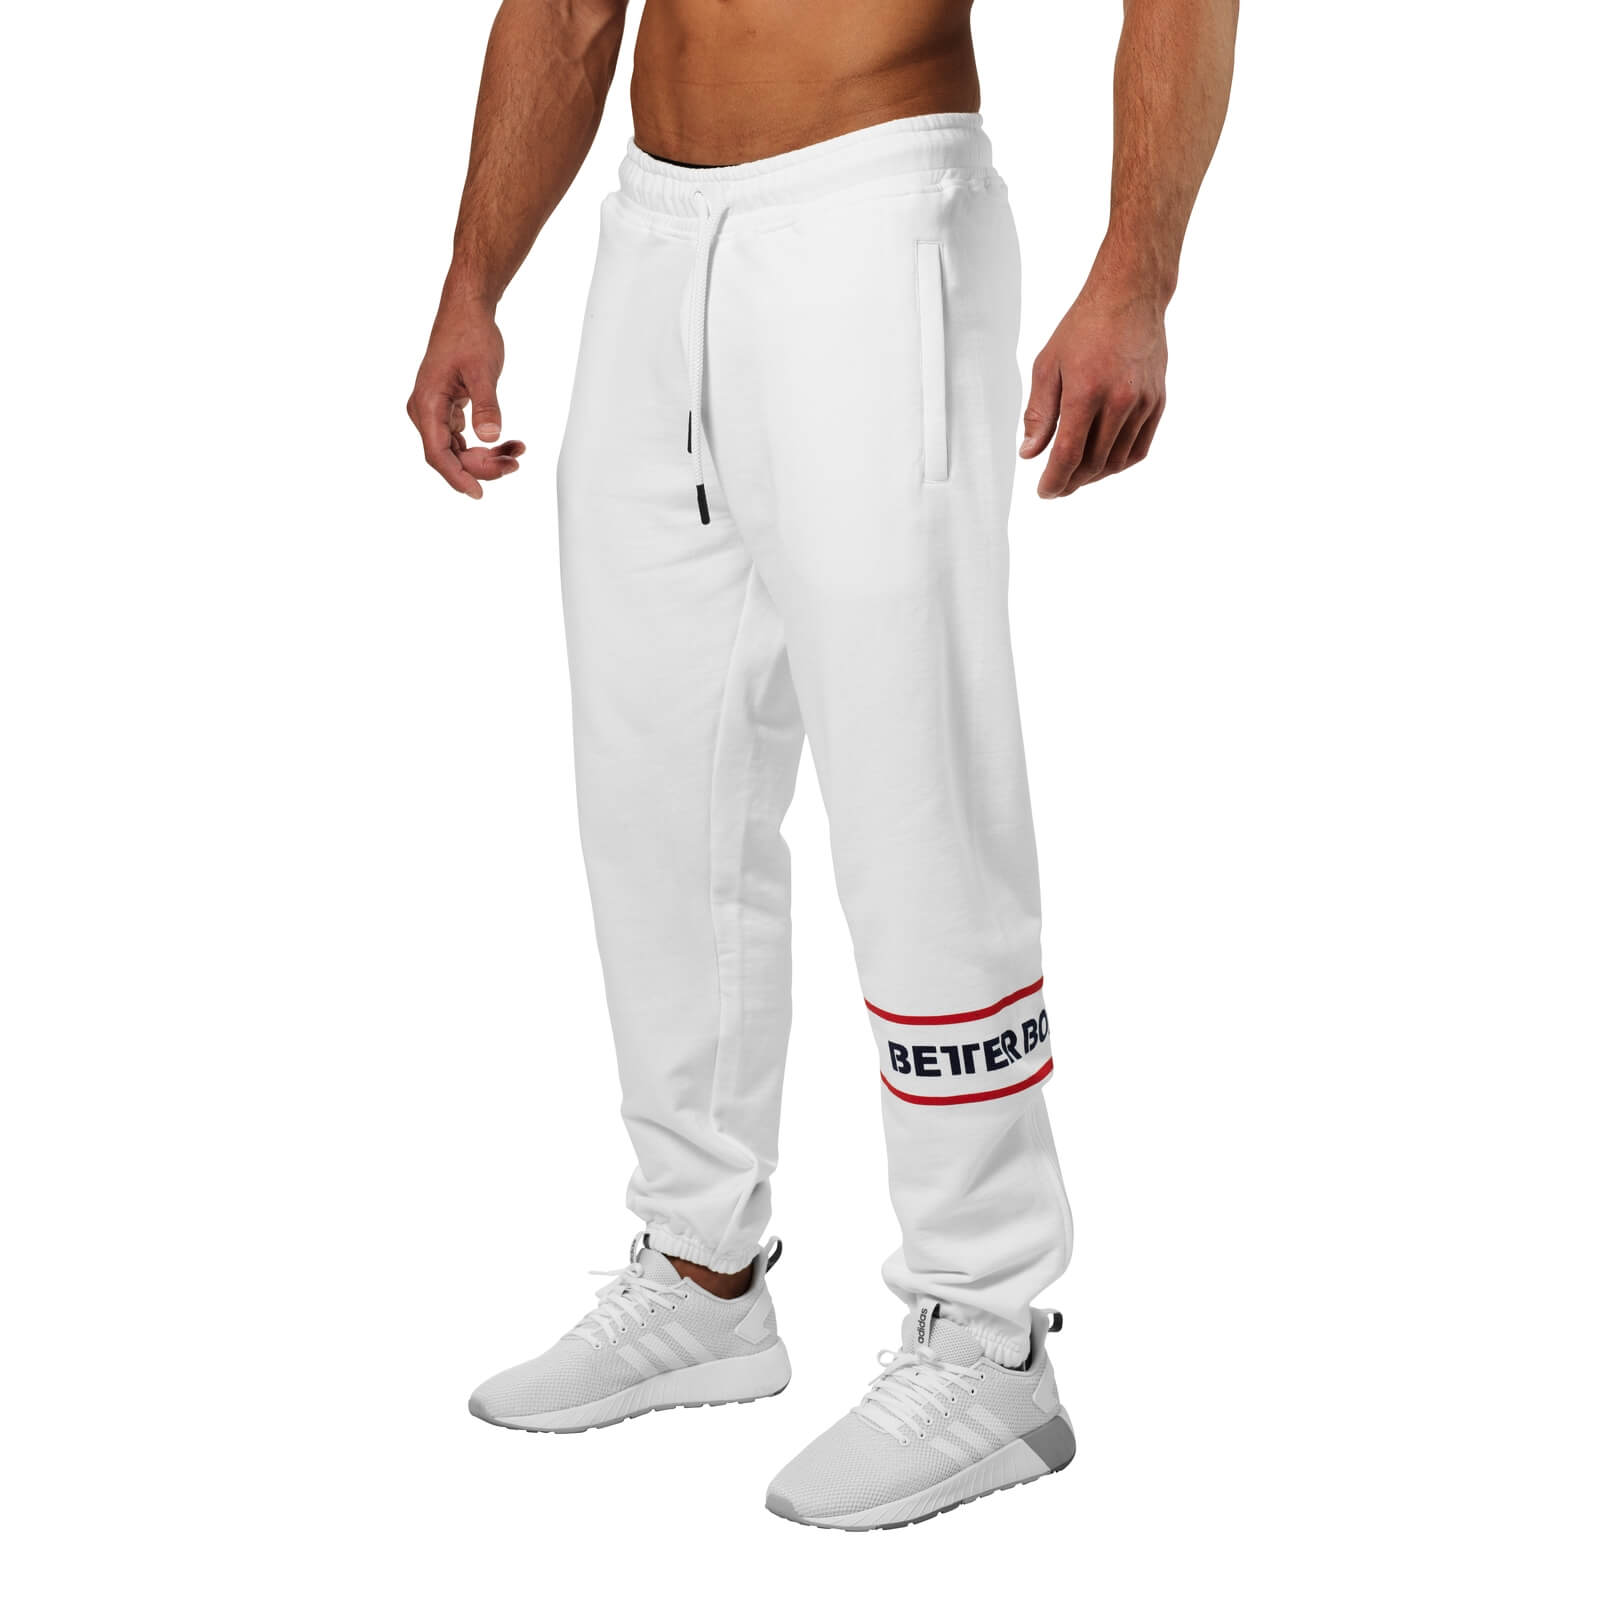 Tribeca Sweat Pants, white, Better Bodies